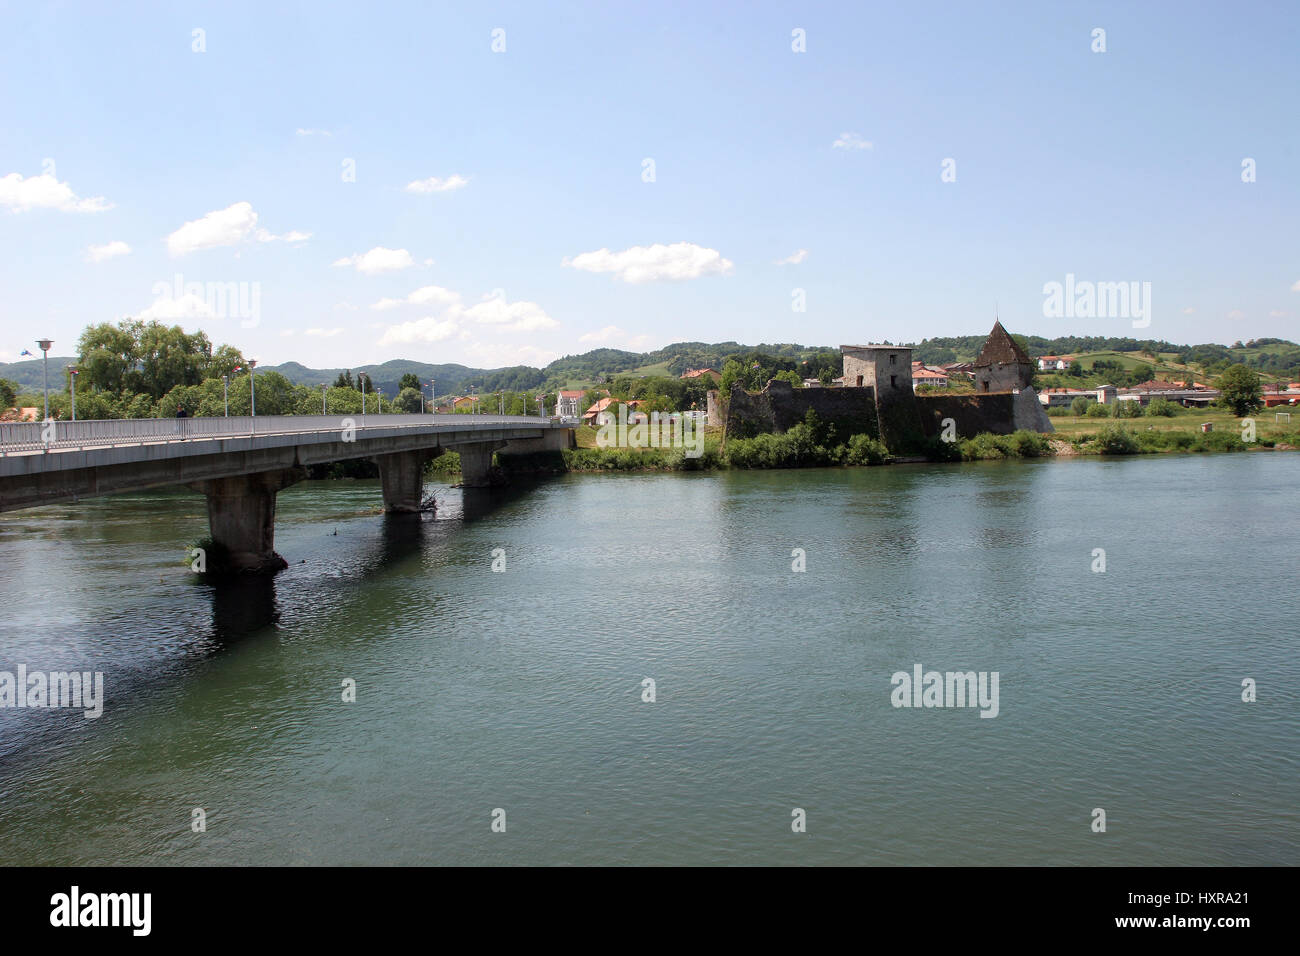 Bridge over the River Una in Hrvatska Kostajnica, Croatia Stock Photo